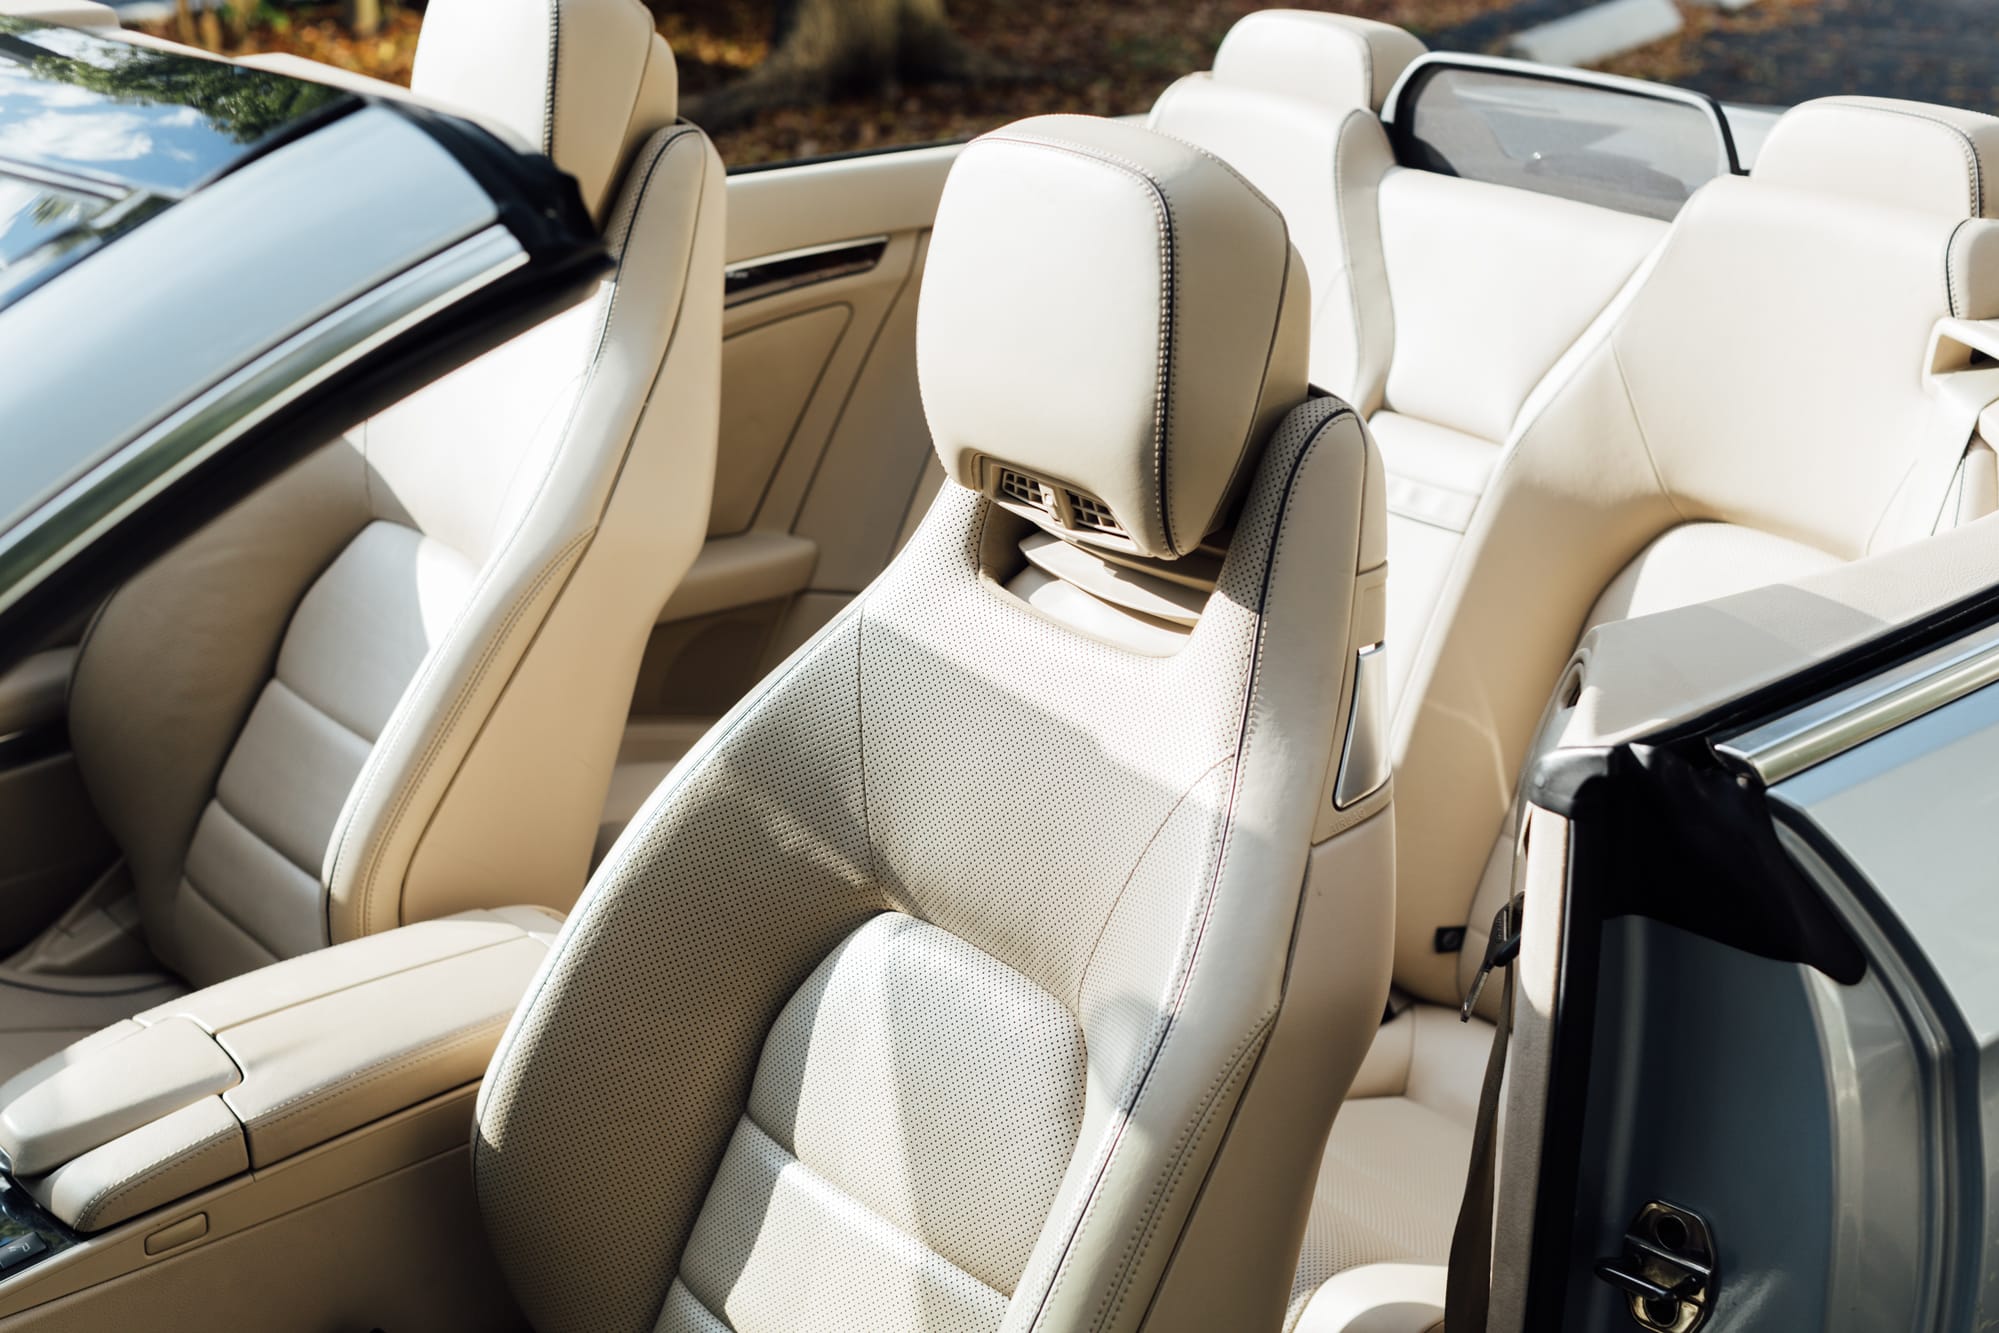 2014 Mercedes-Benz E550 Cabriolet – 53K Miles – Diamond Silver Metallic/Porcelain Nappa Leather – AMG Sport Line – Open Air Cruiser